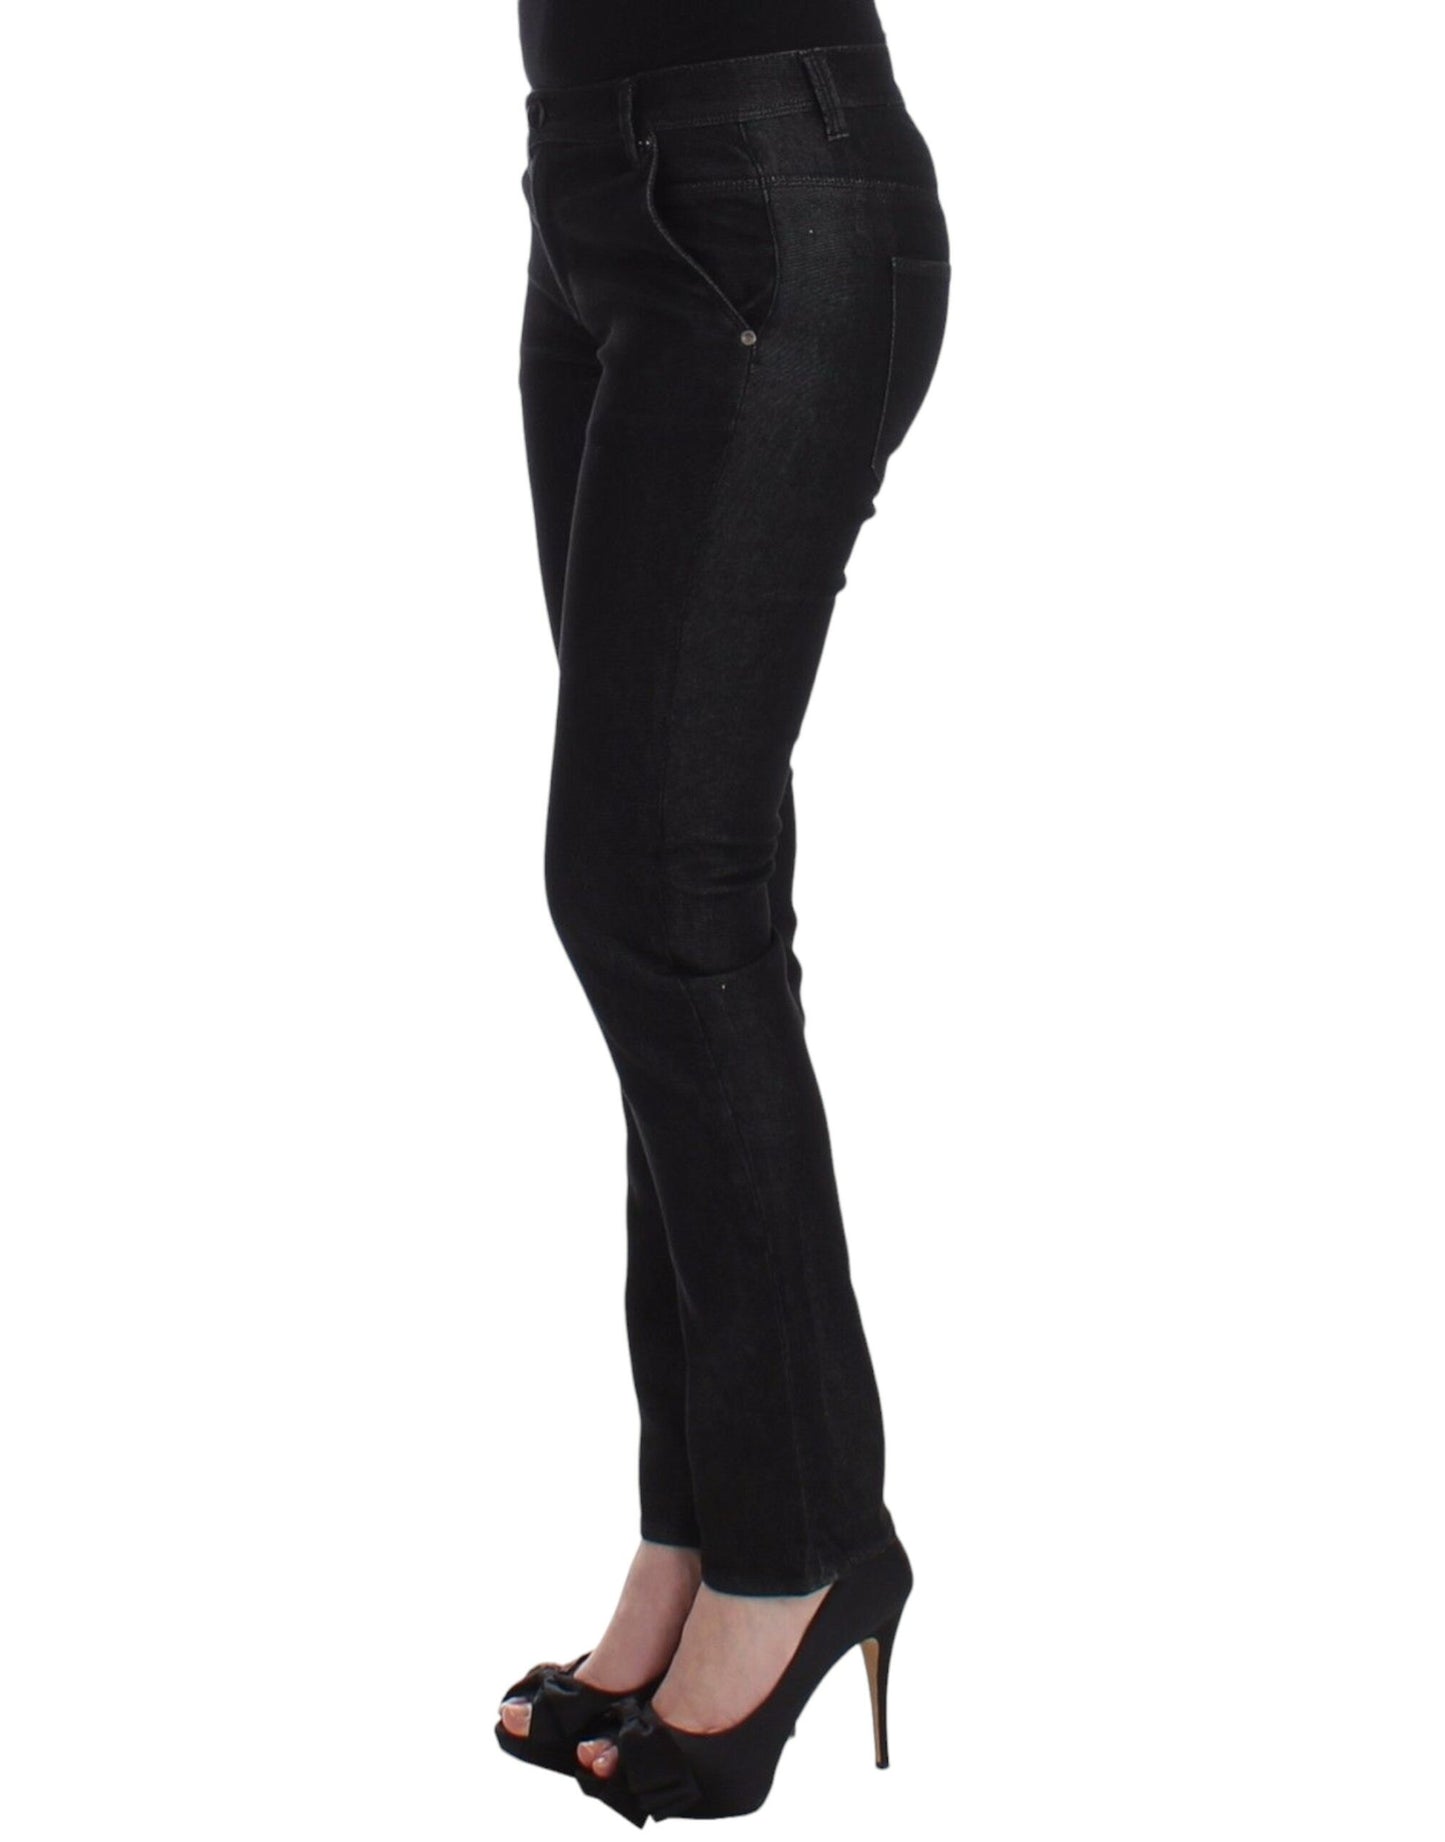 Chic Black Skinny Jeans - Elegant & Slim Fit